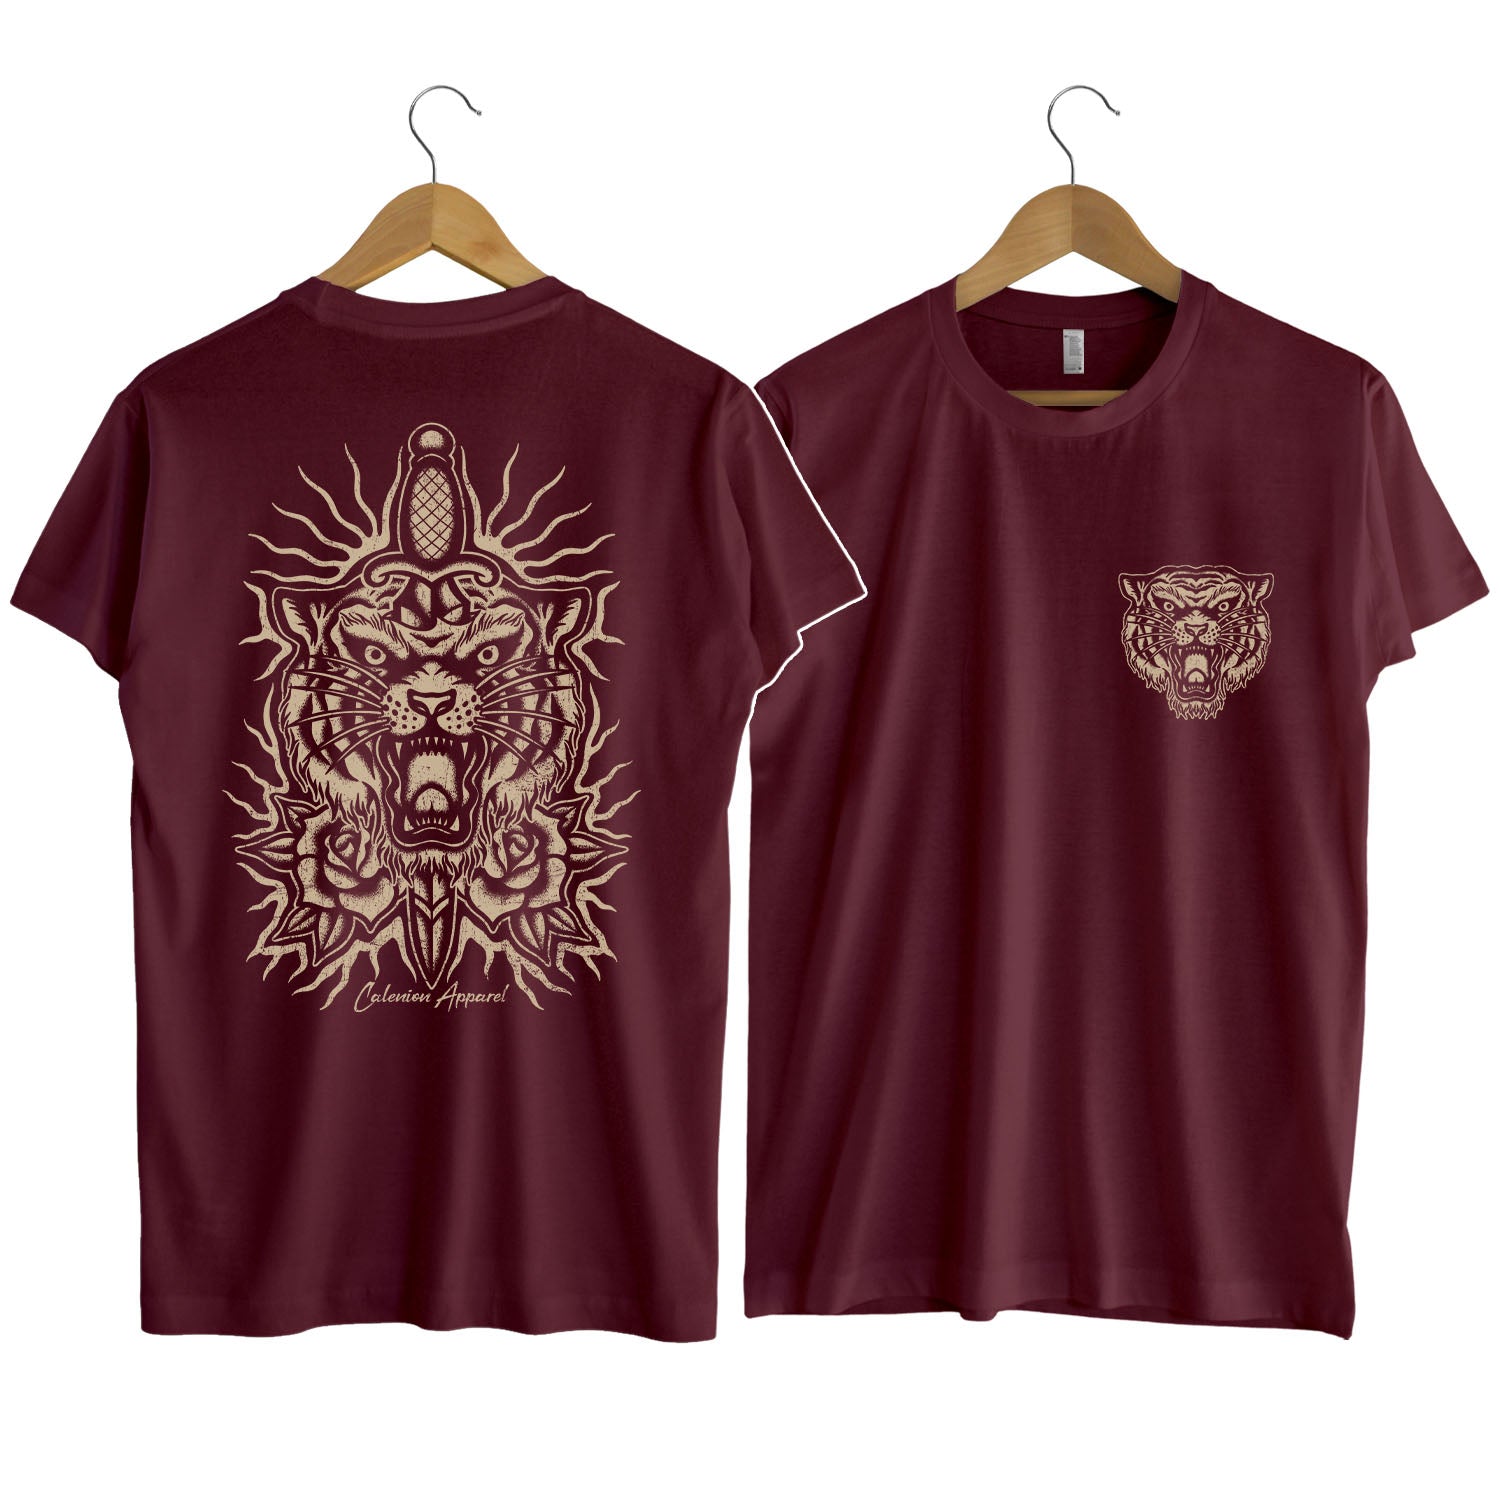 Tiger & Sword T-Shirt | Calenion Apparel